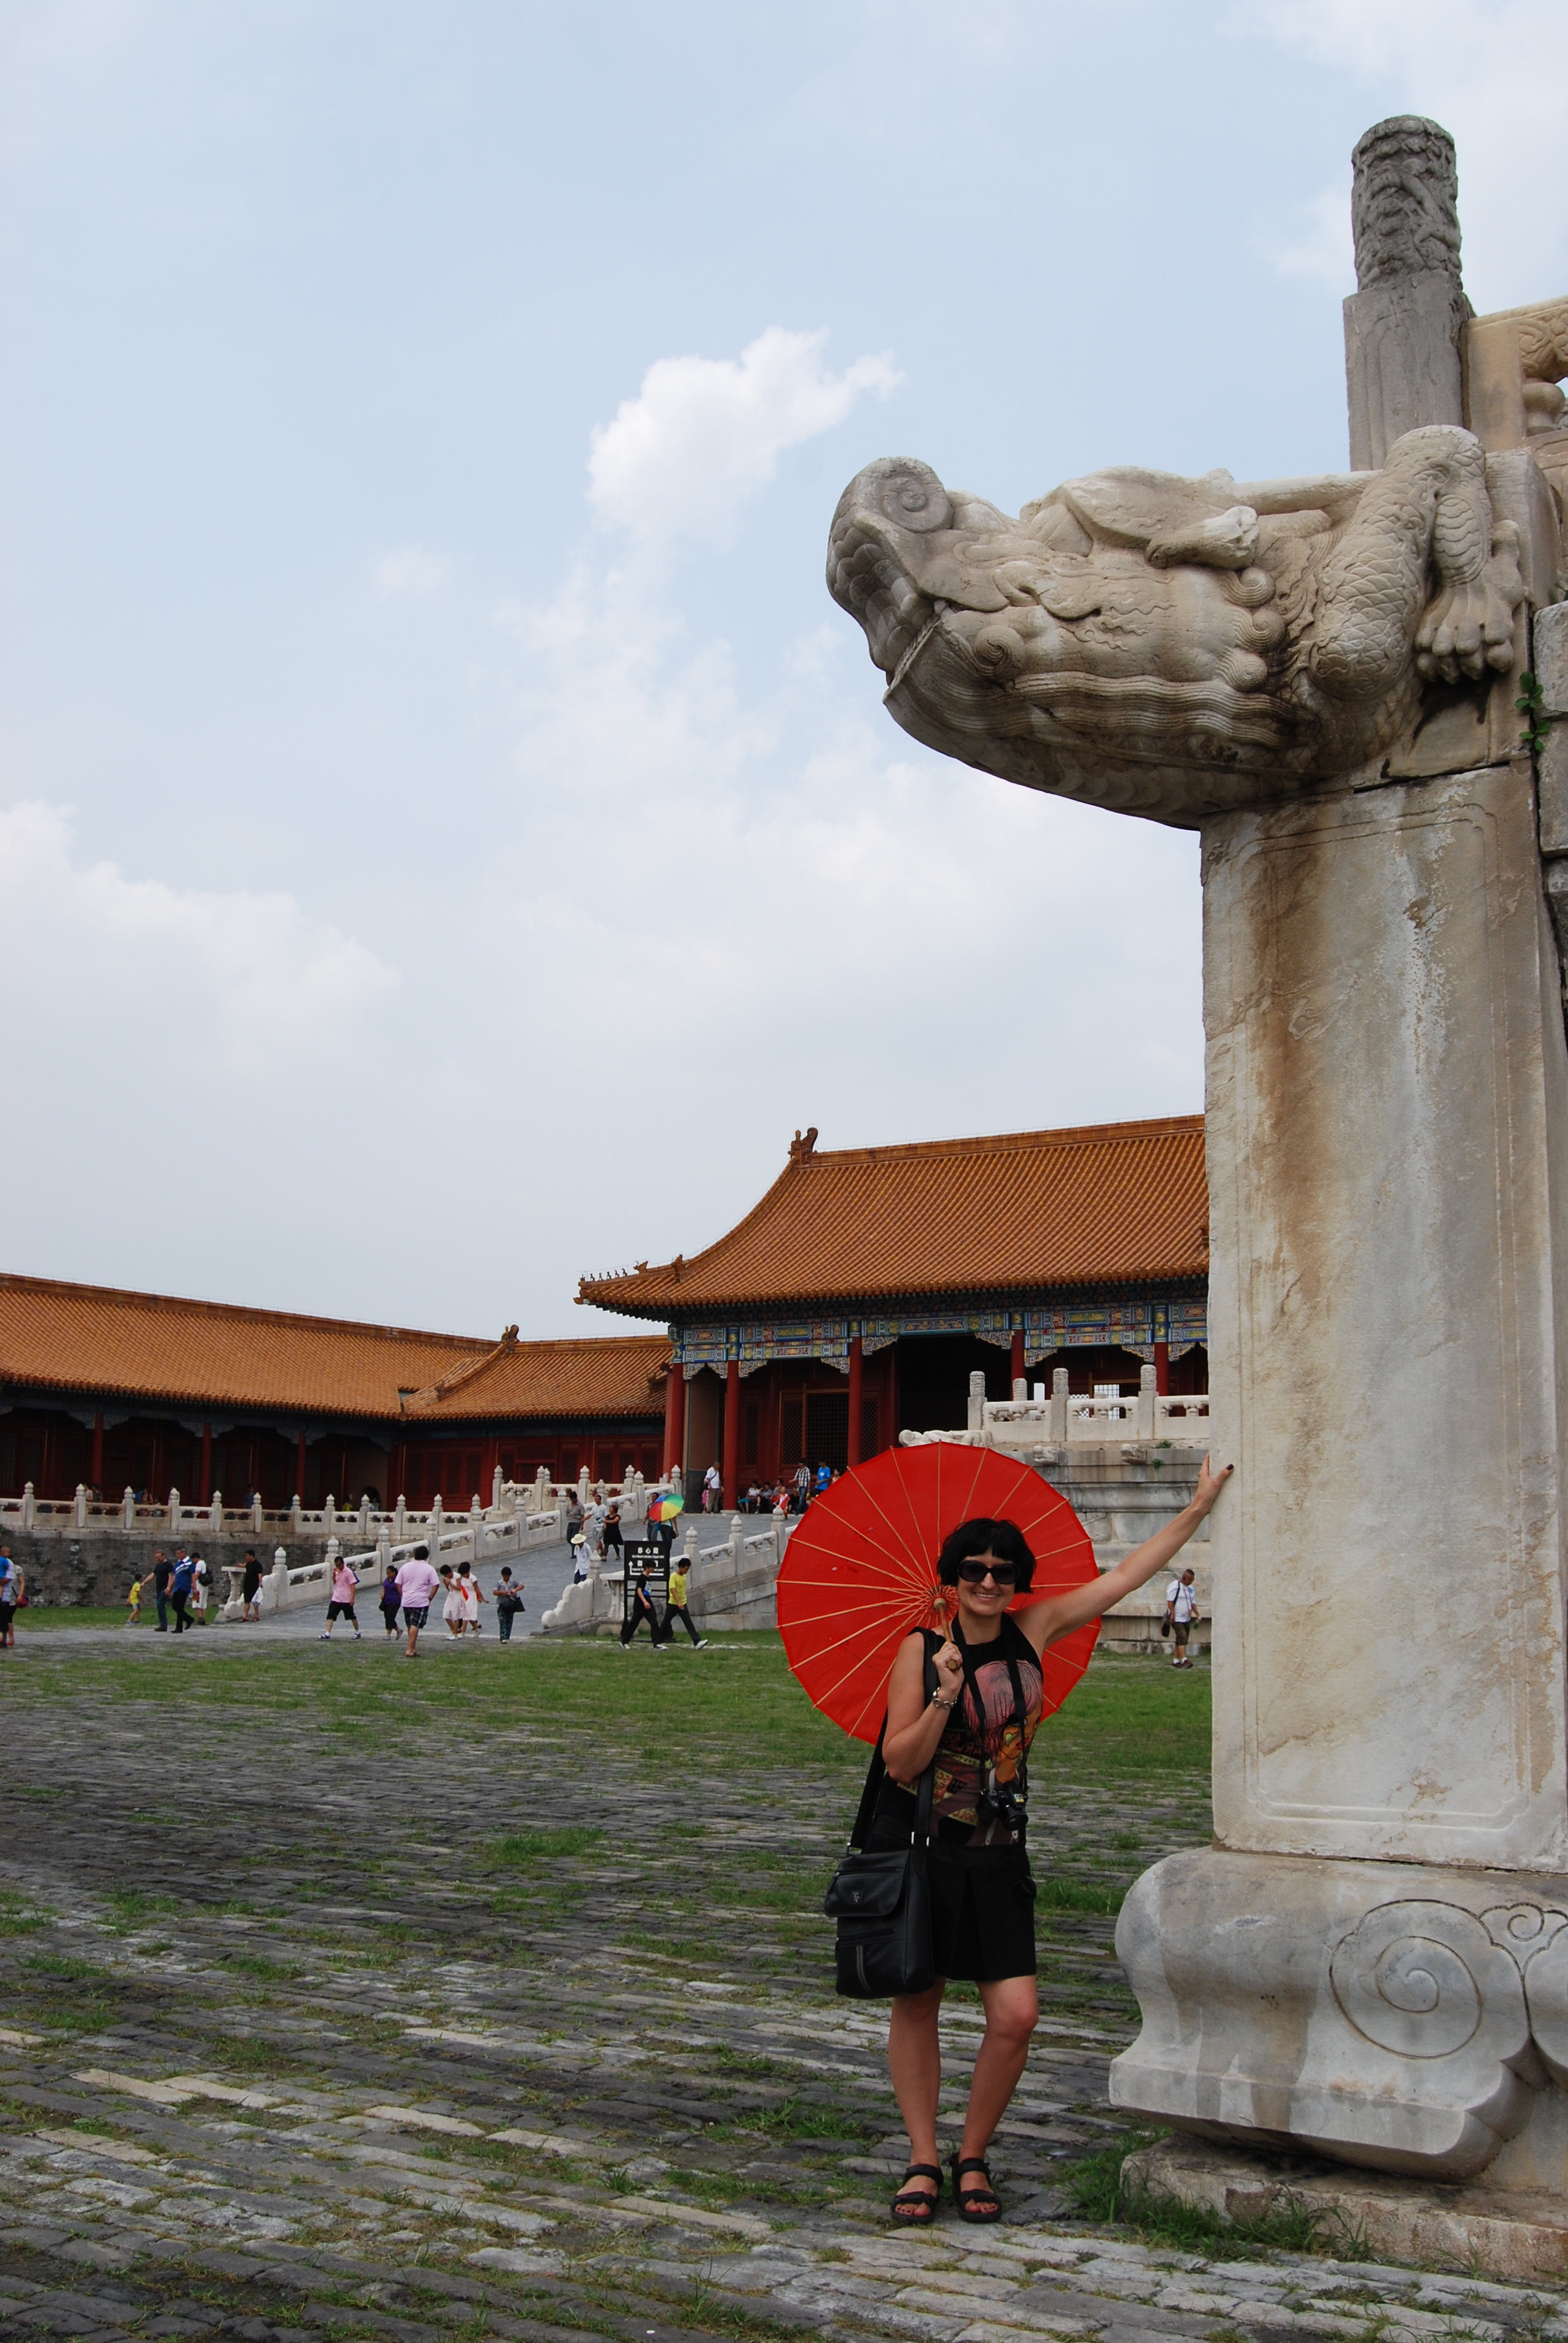 Stepping into Beijing's Forbidden City